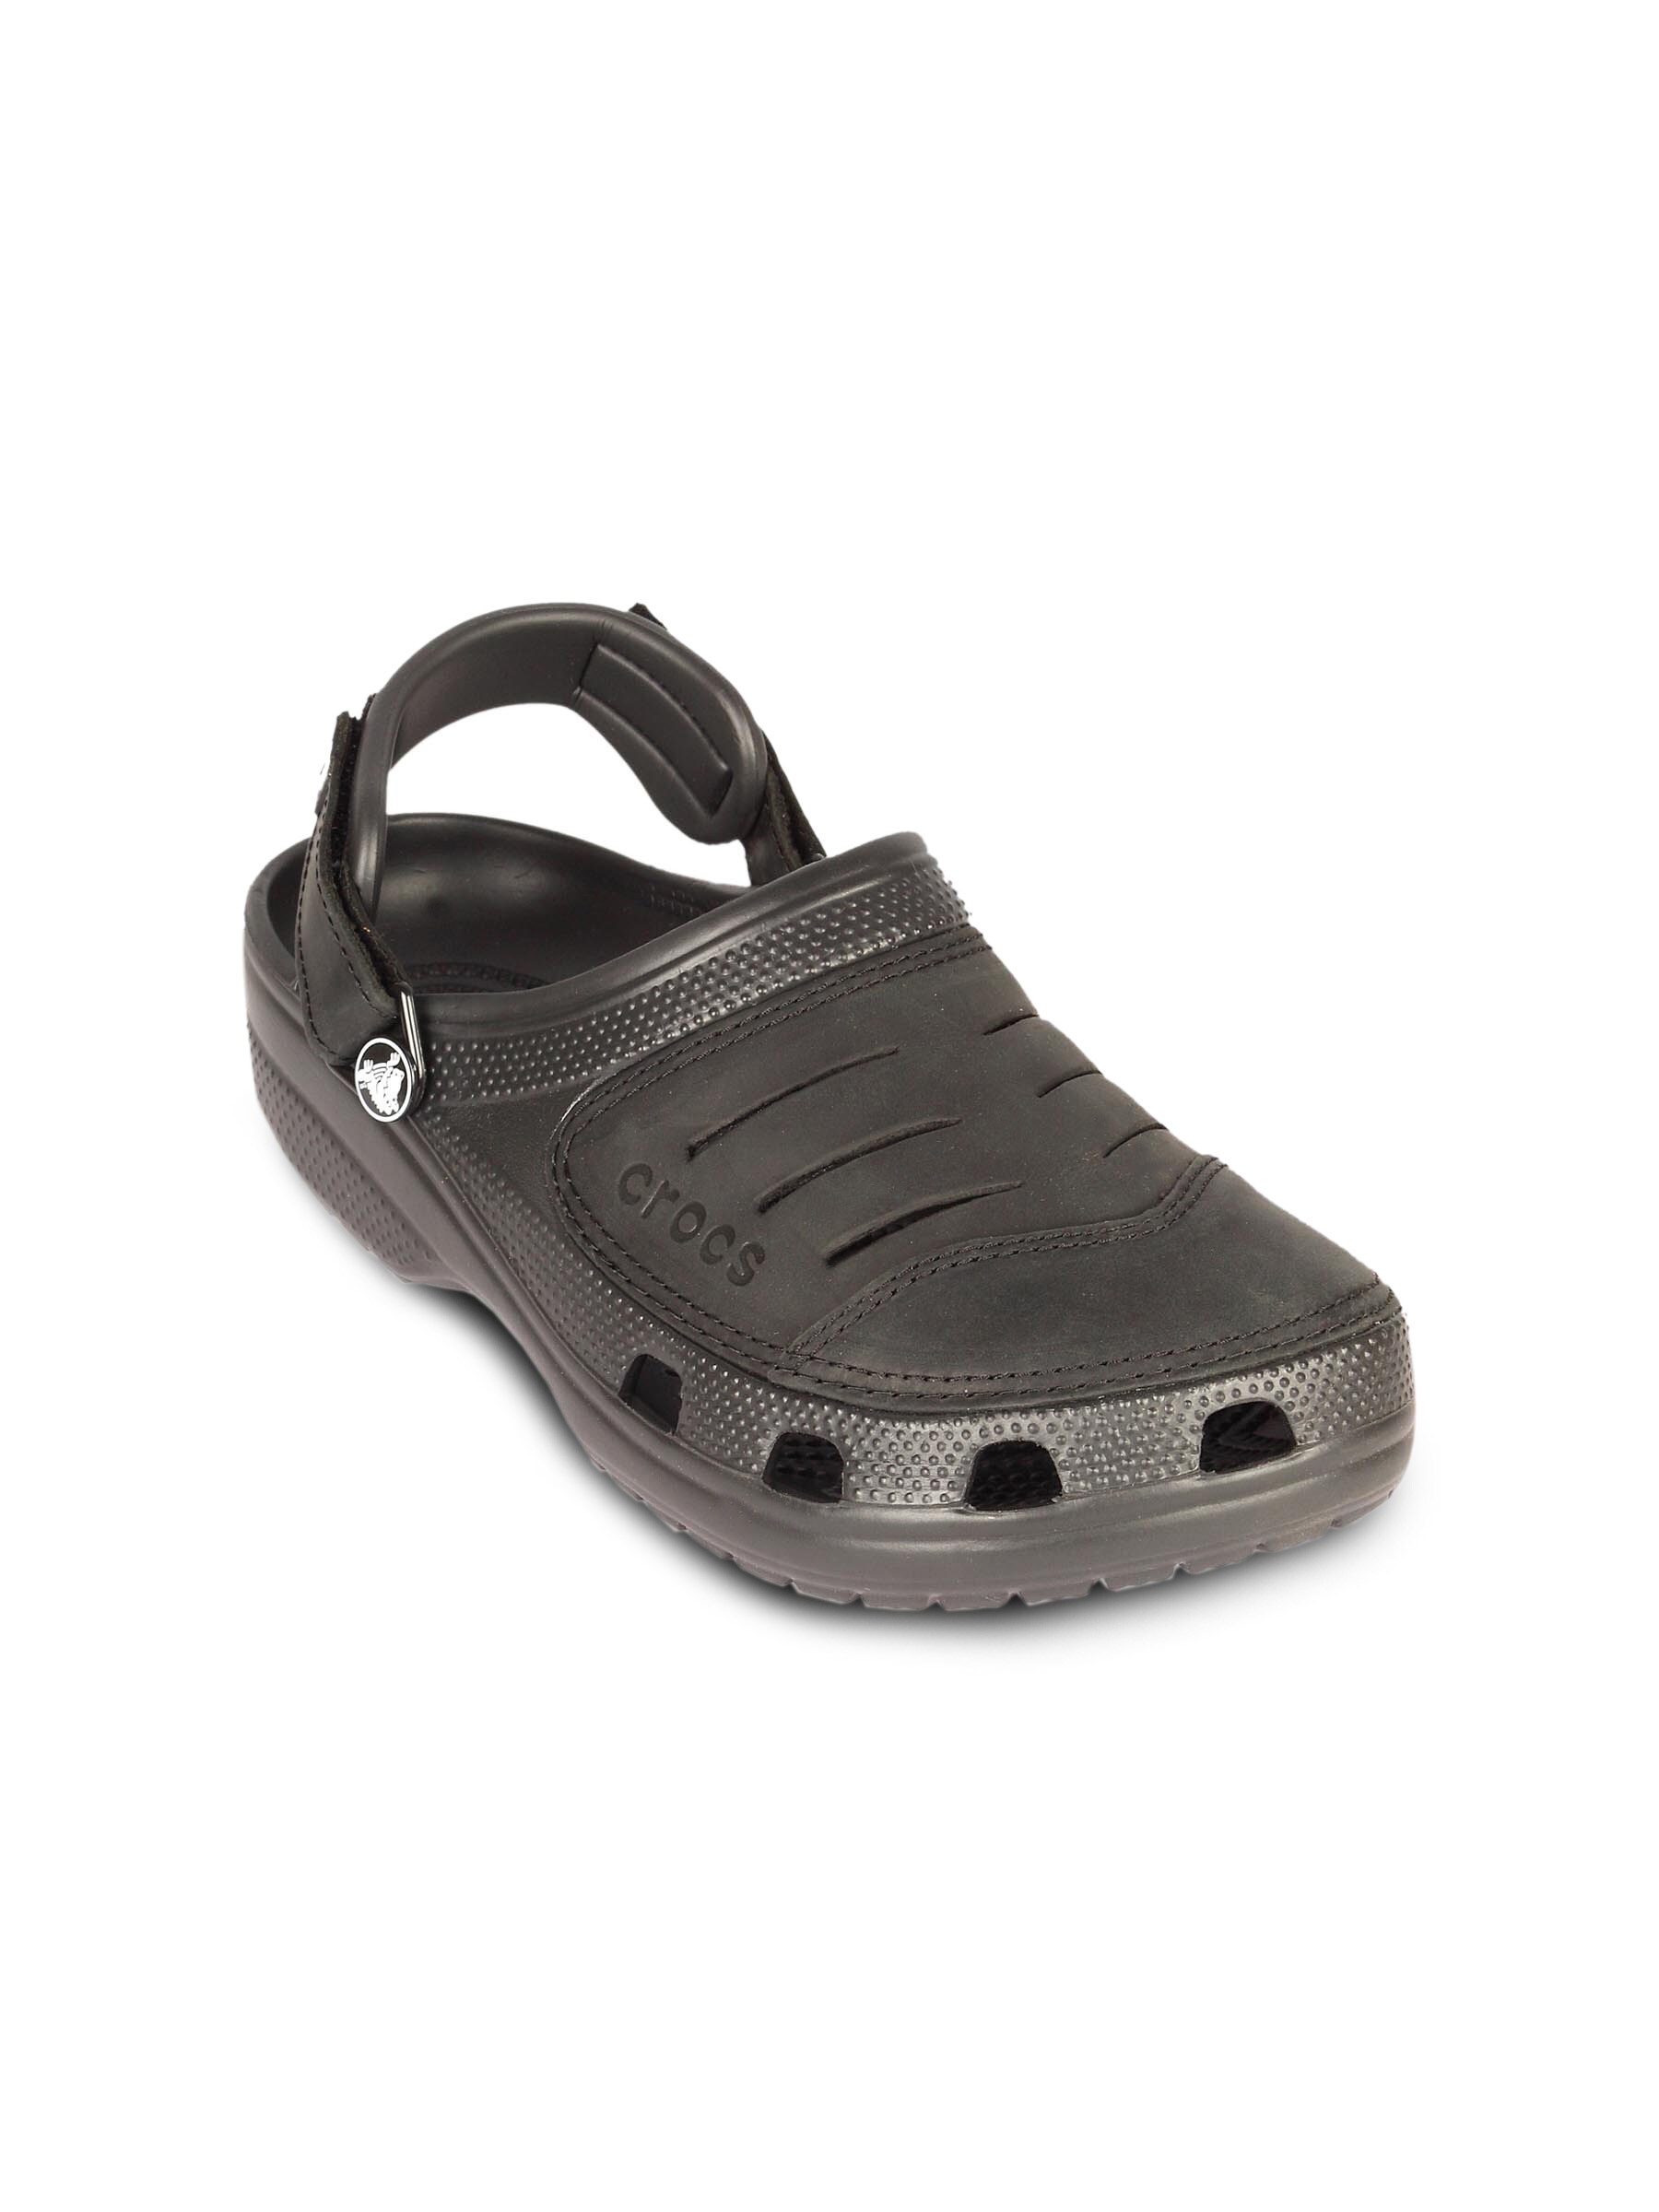 Crocs Men Yukon Black Sandal